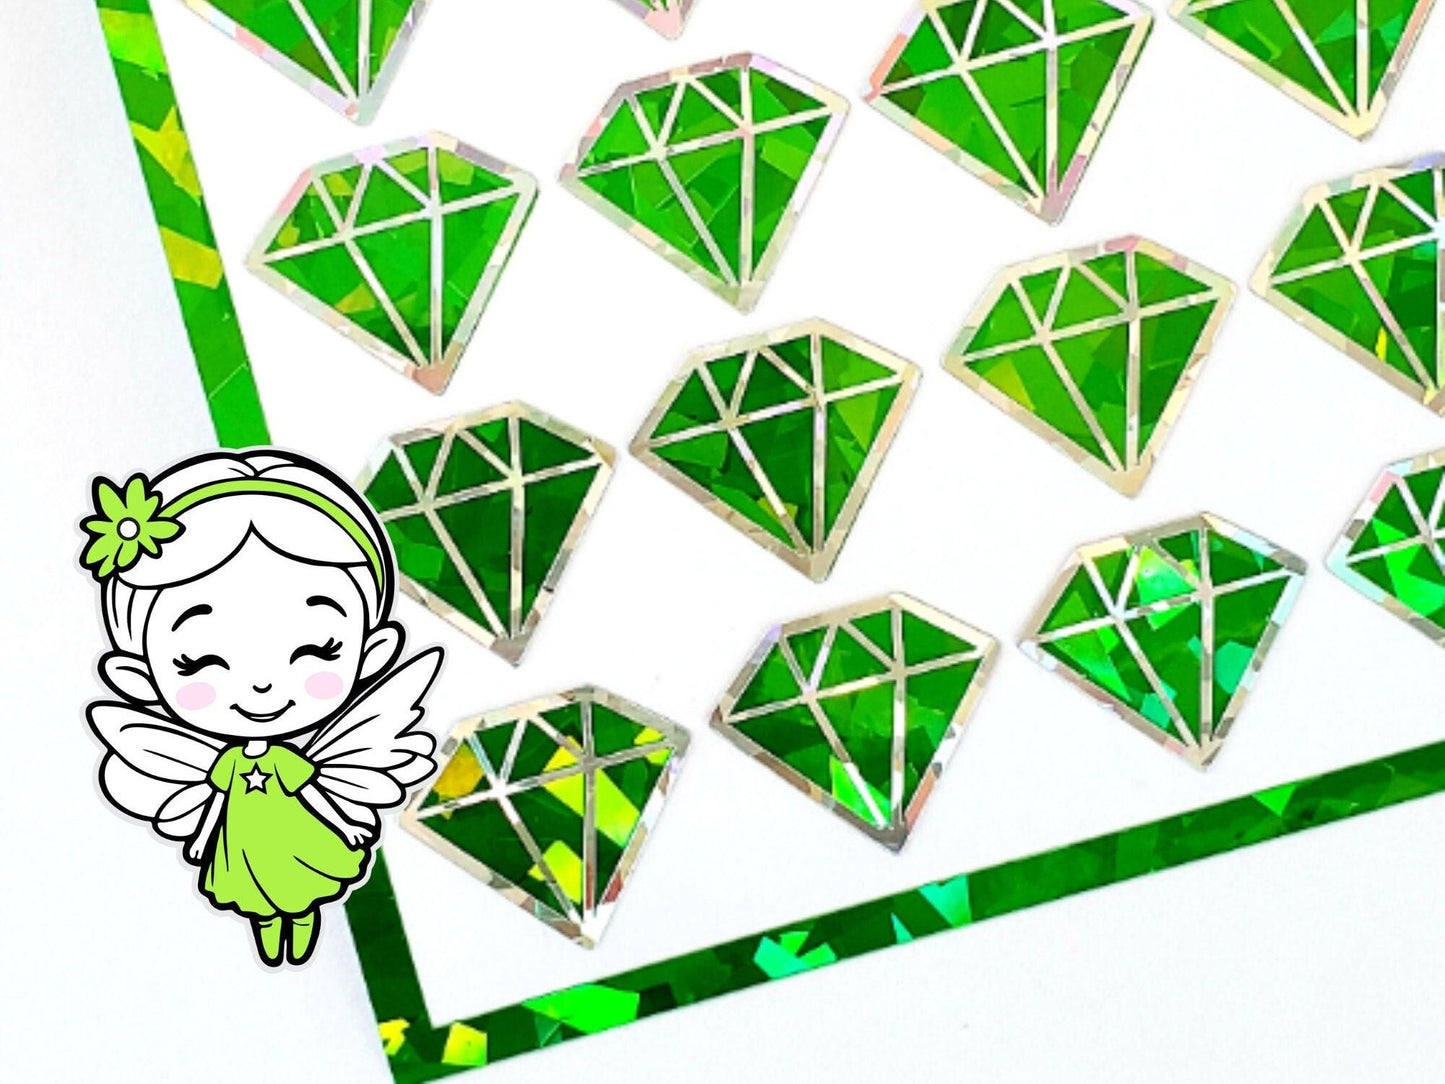 Green Crystal Jewel Stickers, set of 40 sparkly peridot birthstone stickers for August birthday, Virgo zodiac gift, diamond shape stickers.